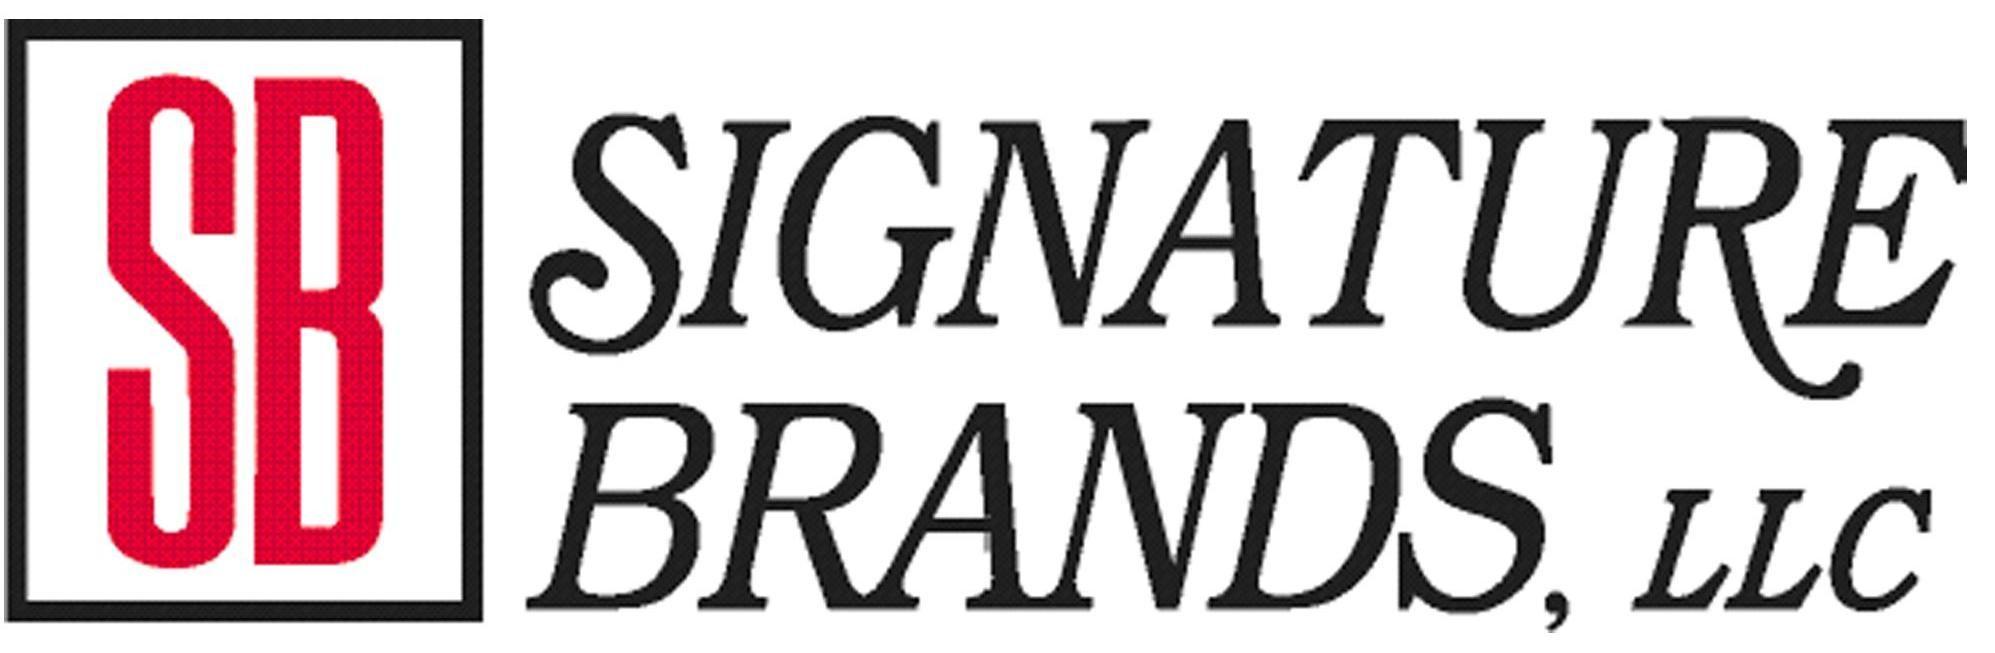 Signature Brands Logo - Thank You Signature Brands!